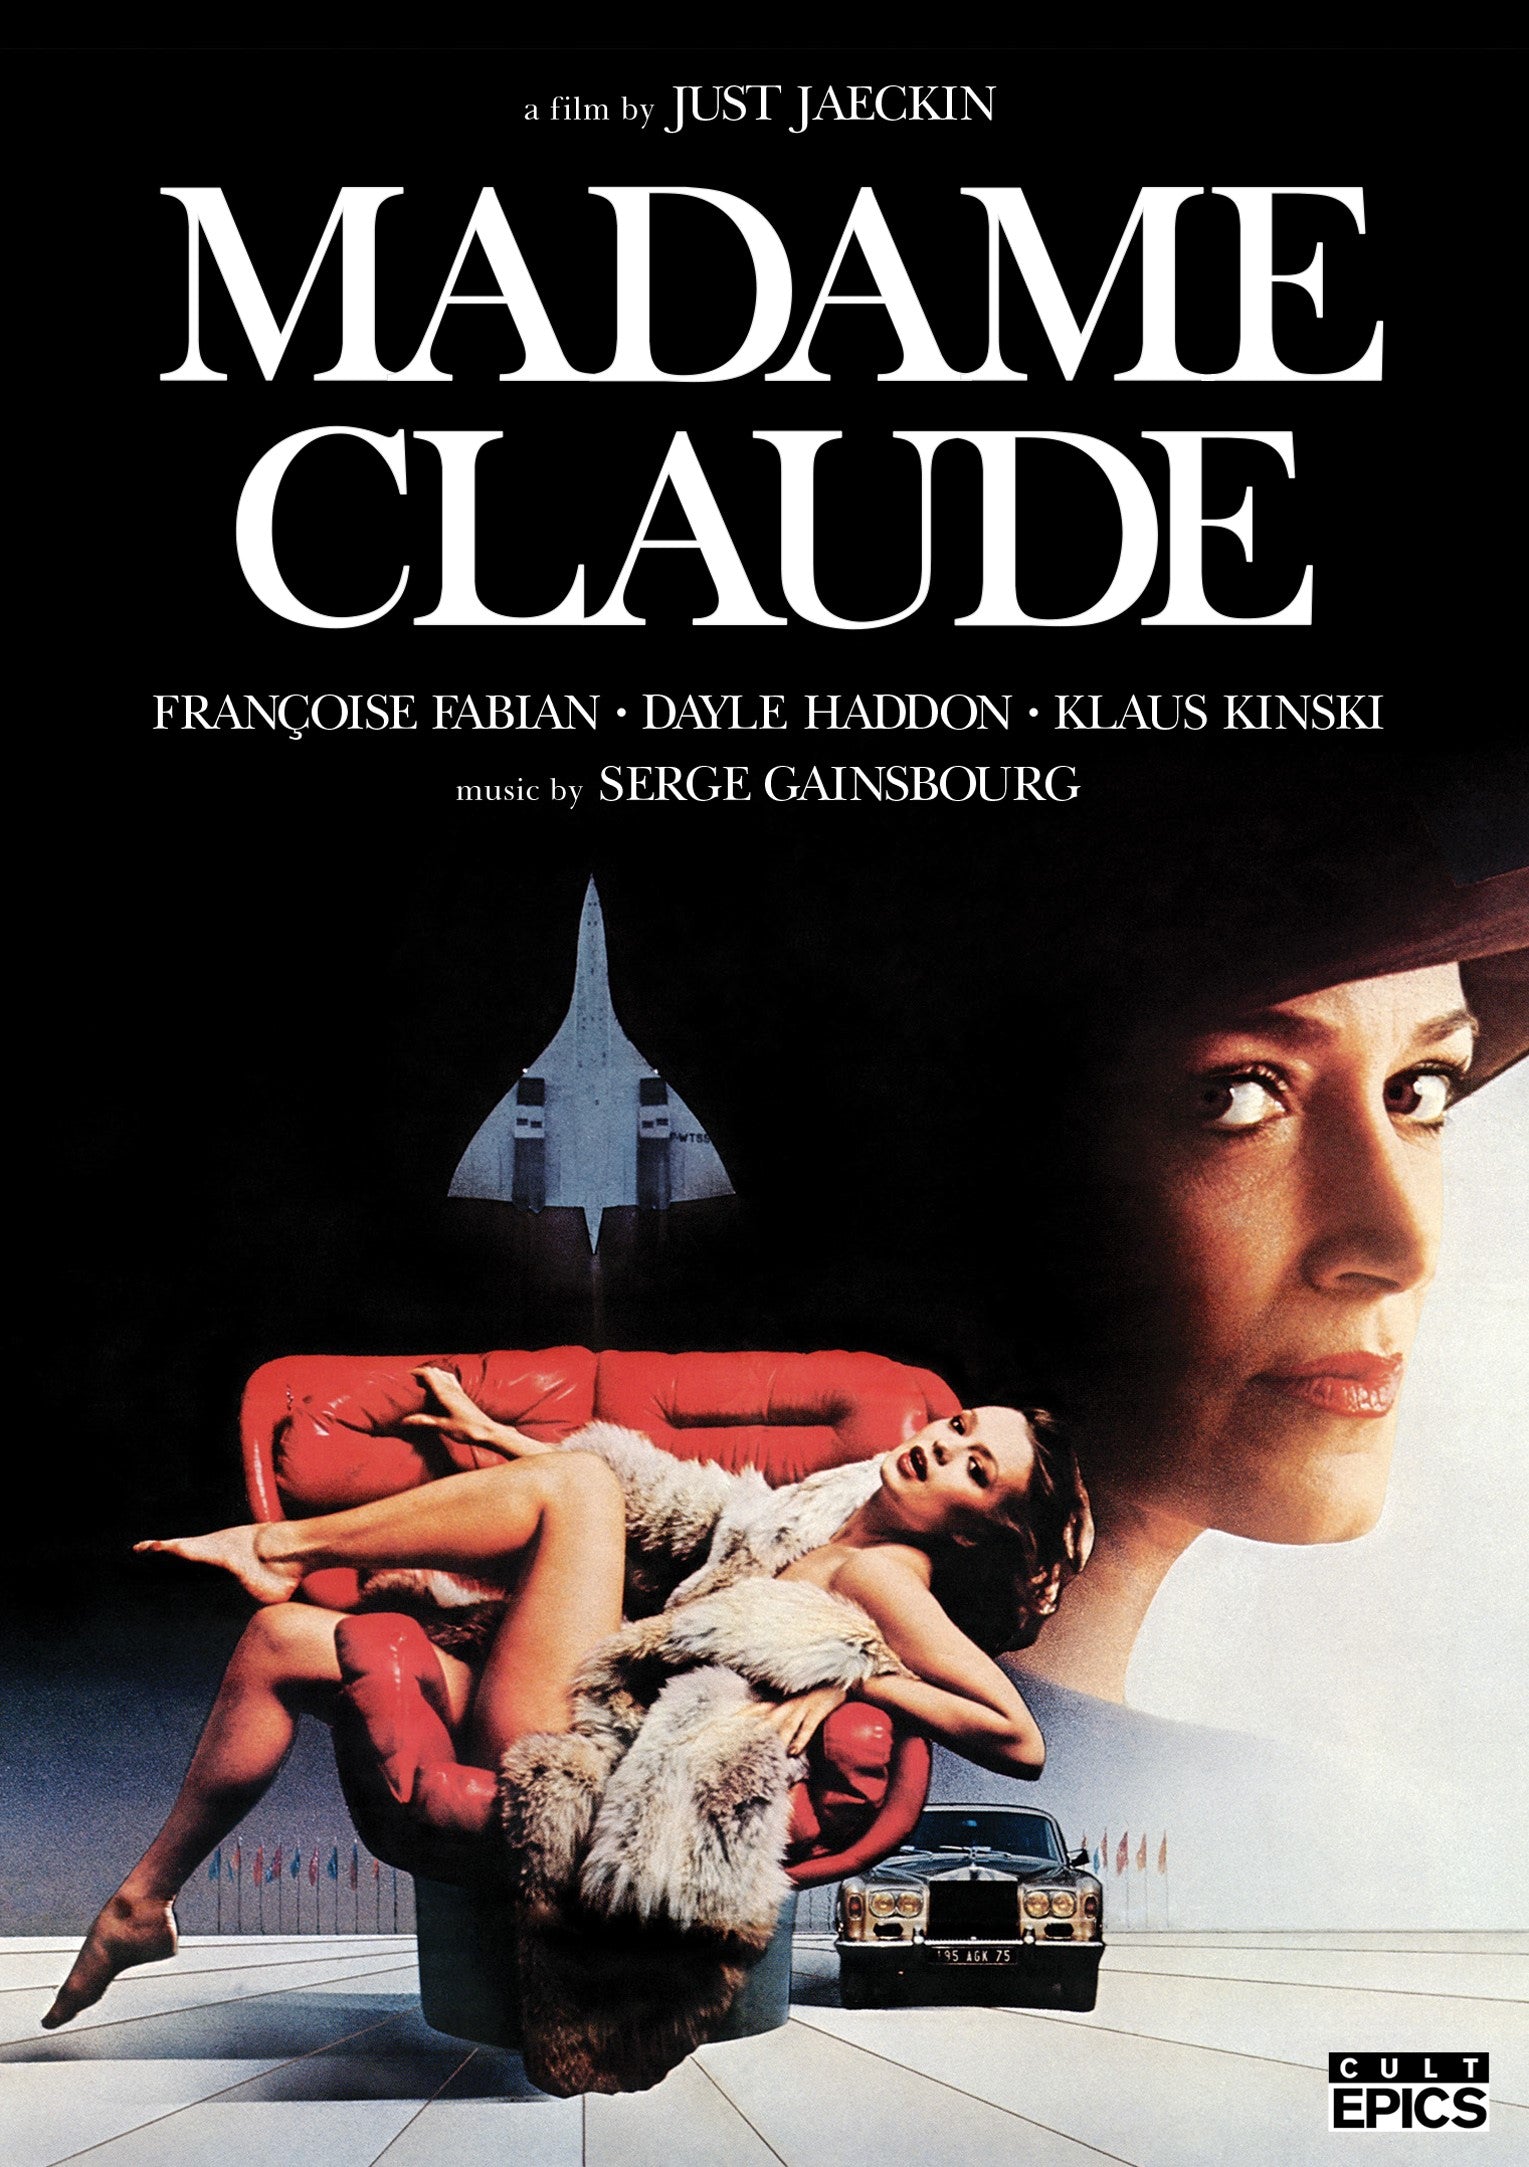 MADAME CLAUDE DVD